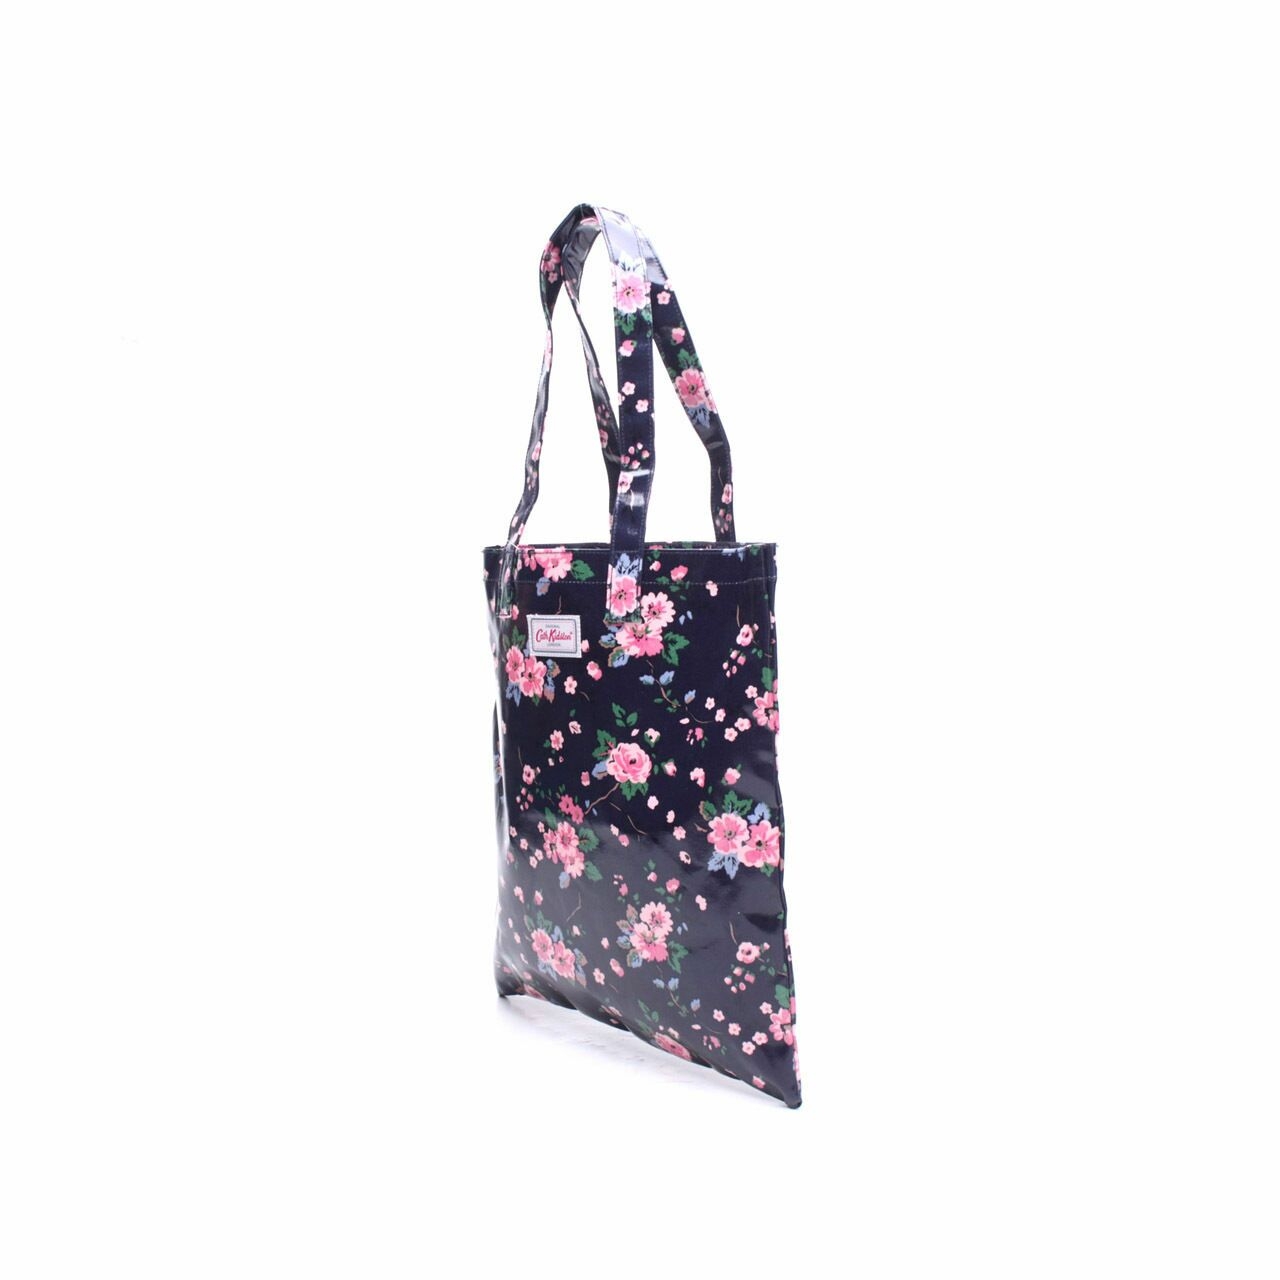 Cath Kidston Navy Trailing Rose Shiny Bookbag Tote Bag